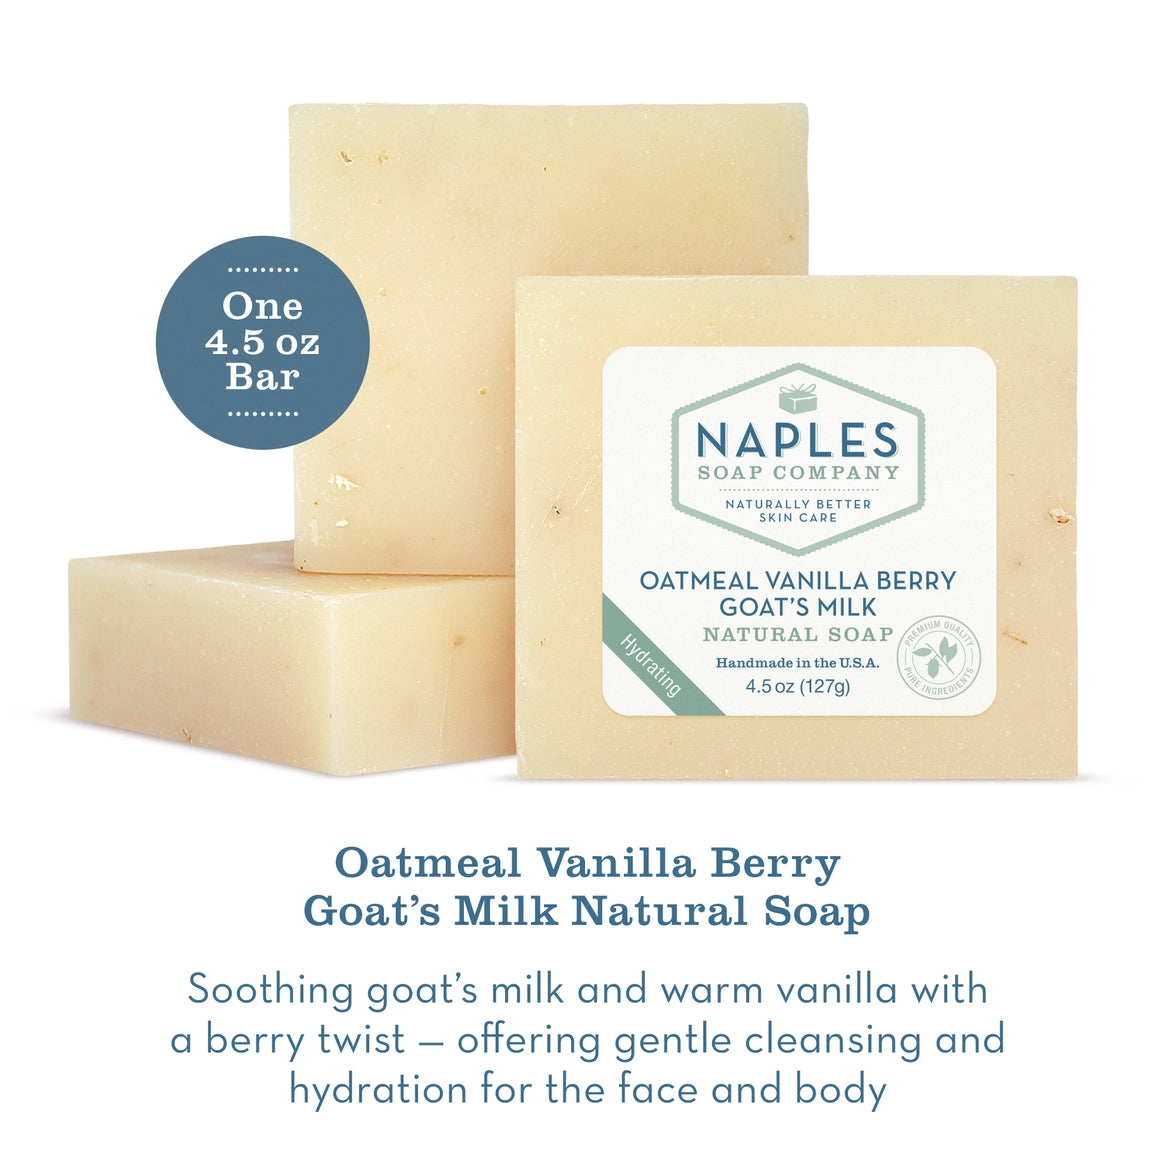 Naples Soap Co.: Oatmeal Vanilla Berry Goat's Milk Natural Soap